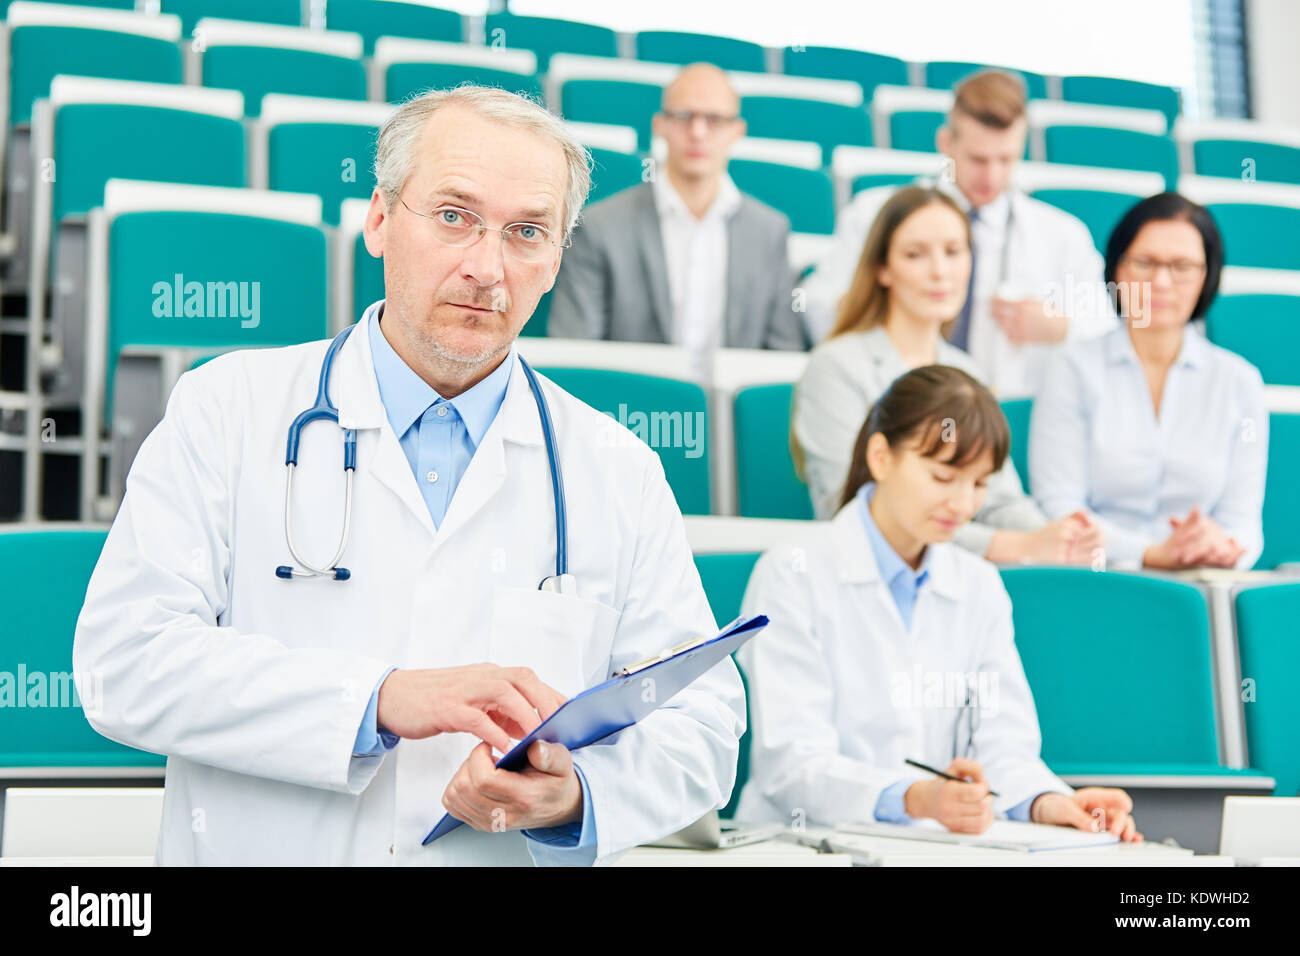 Senior man doctor or physician as medicine lecturer or professor Stock Photo